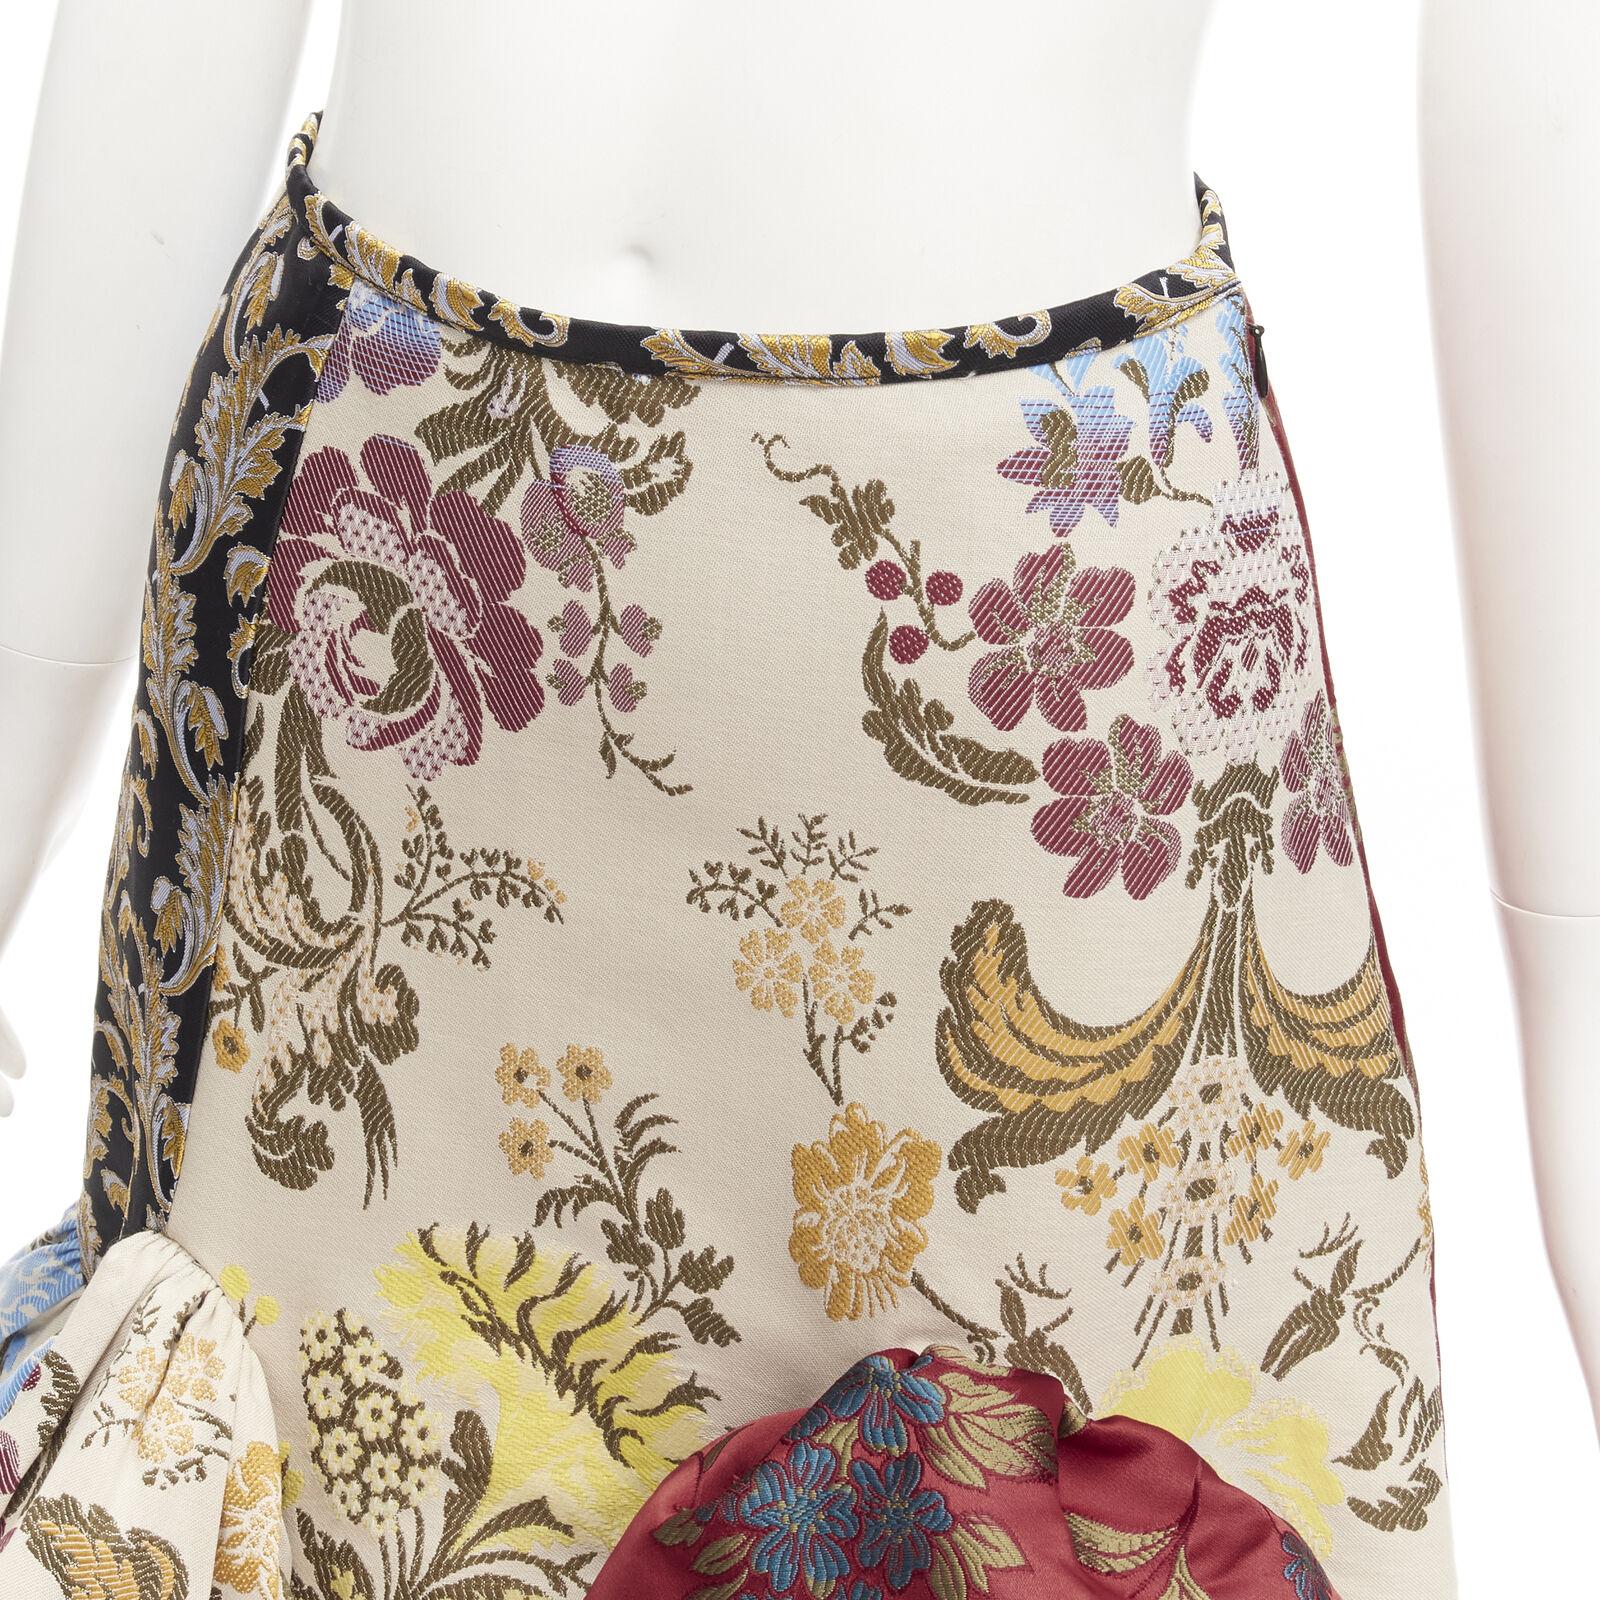 MARQUES ALMEIDA Net Sustain Remade 2020 patchwork brocade ruffled skirt UK6 XS 2